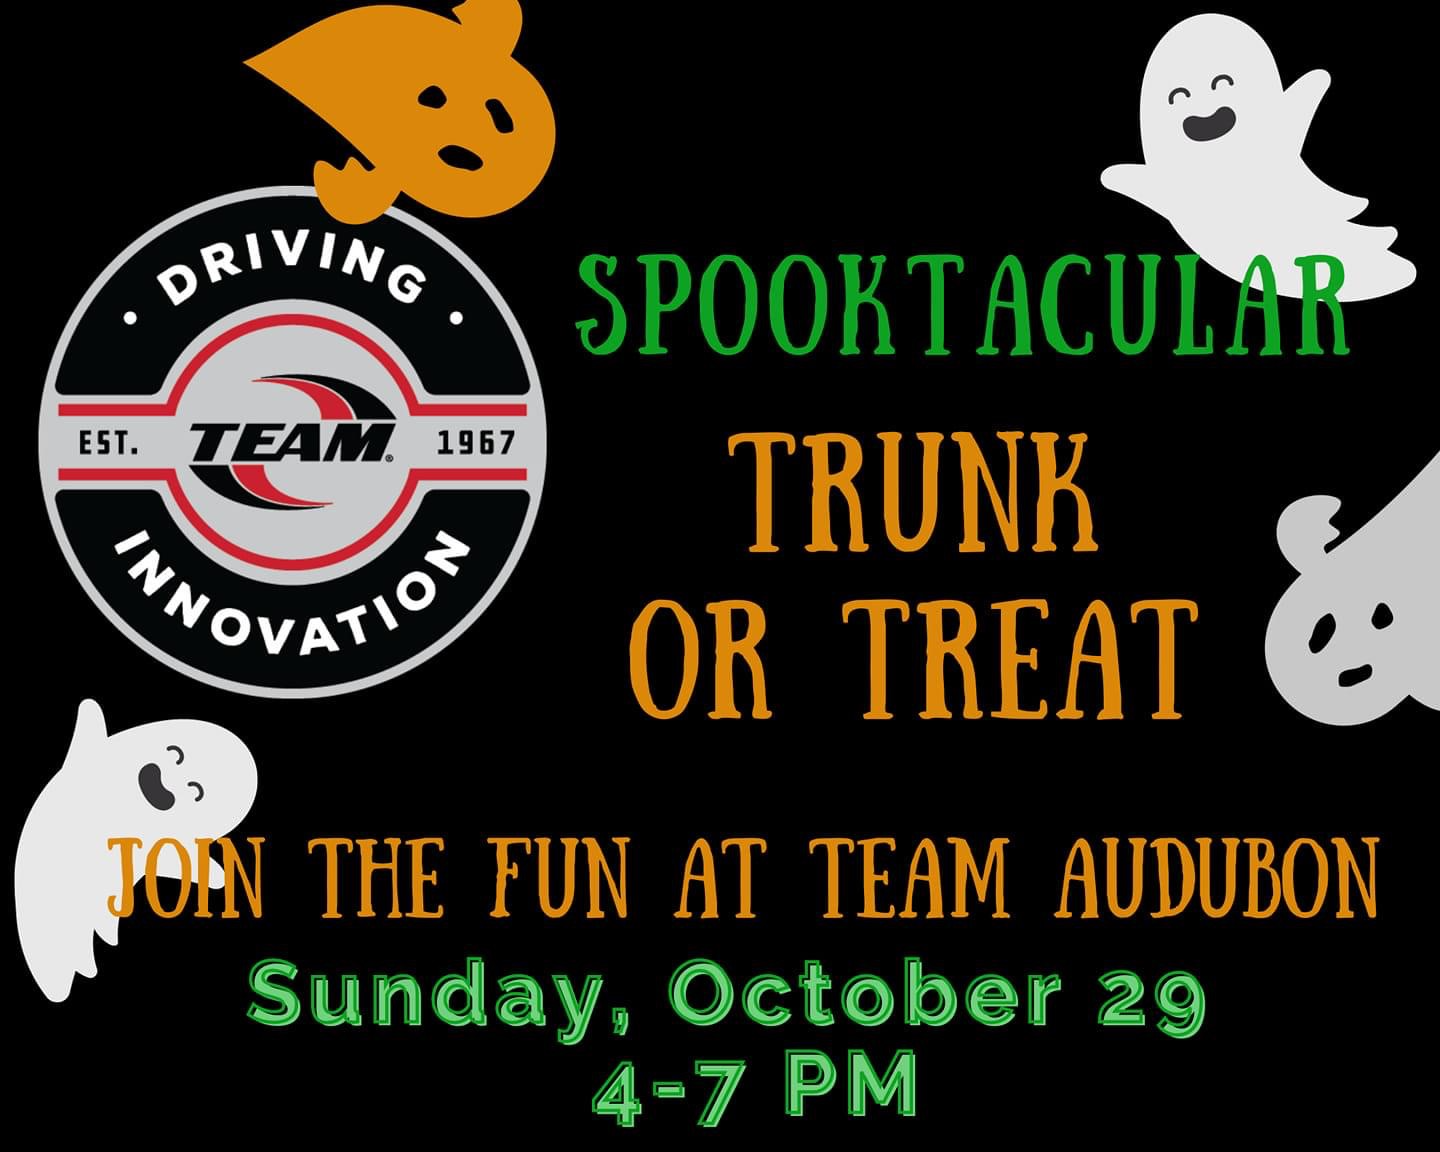 Spooktacular trunk or treat